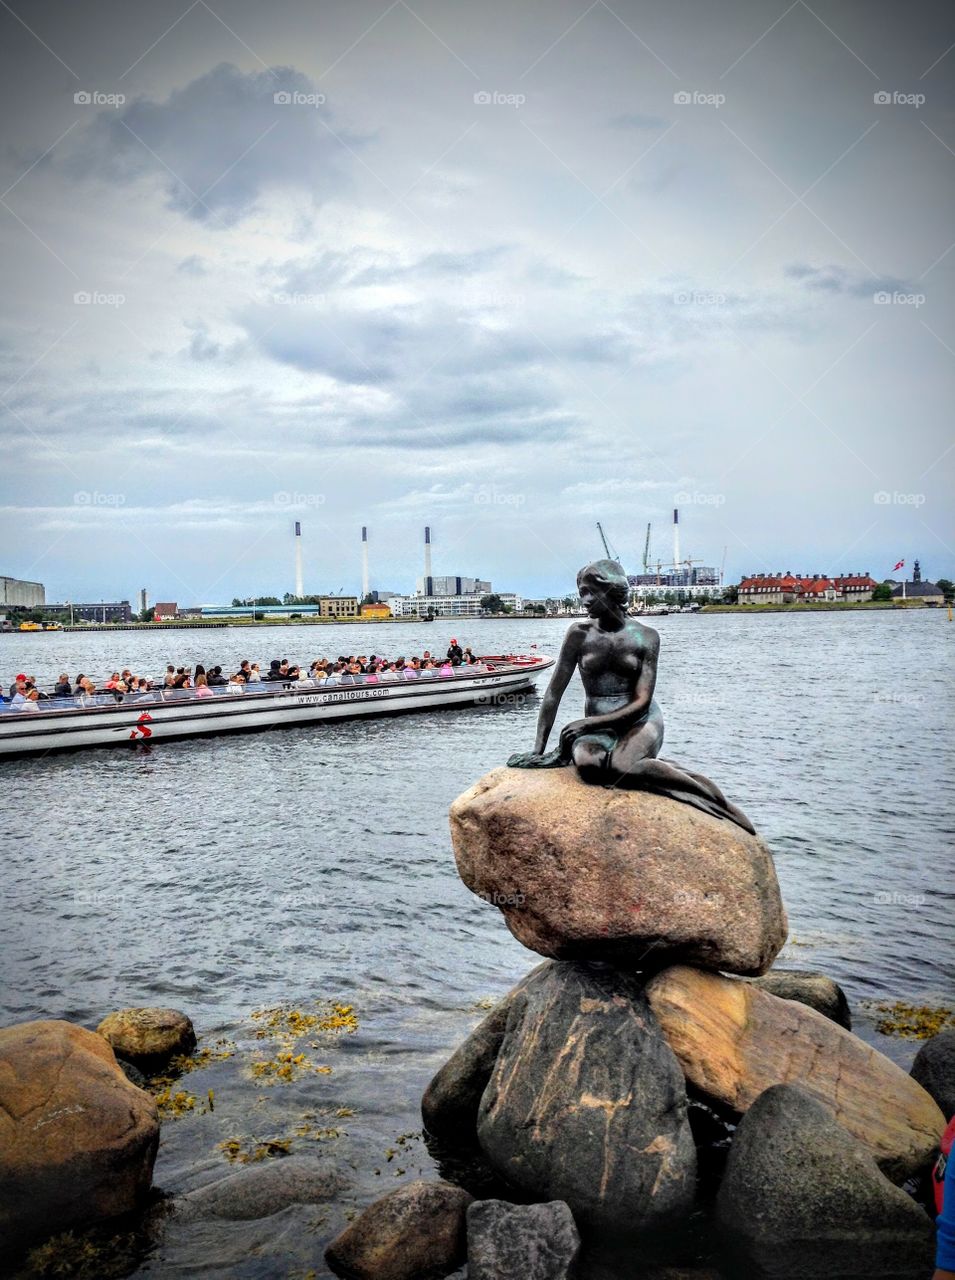 The little mermaid statue 
Copenhagen